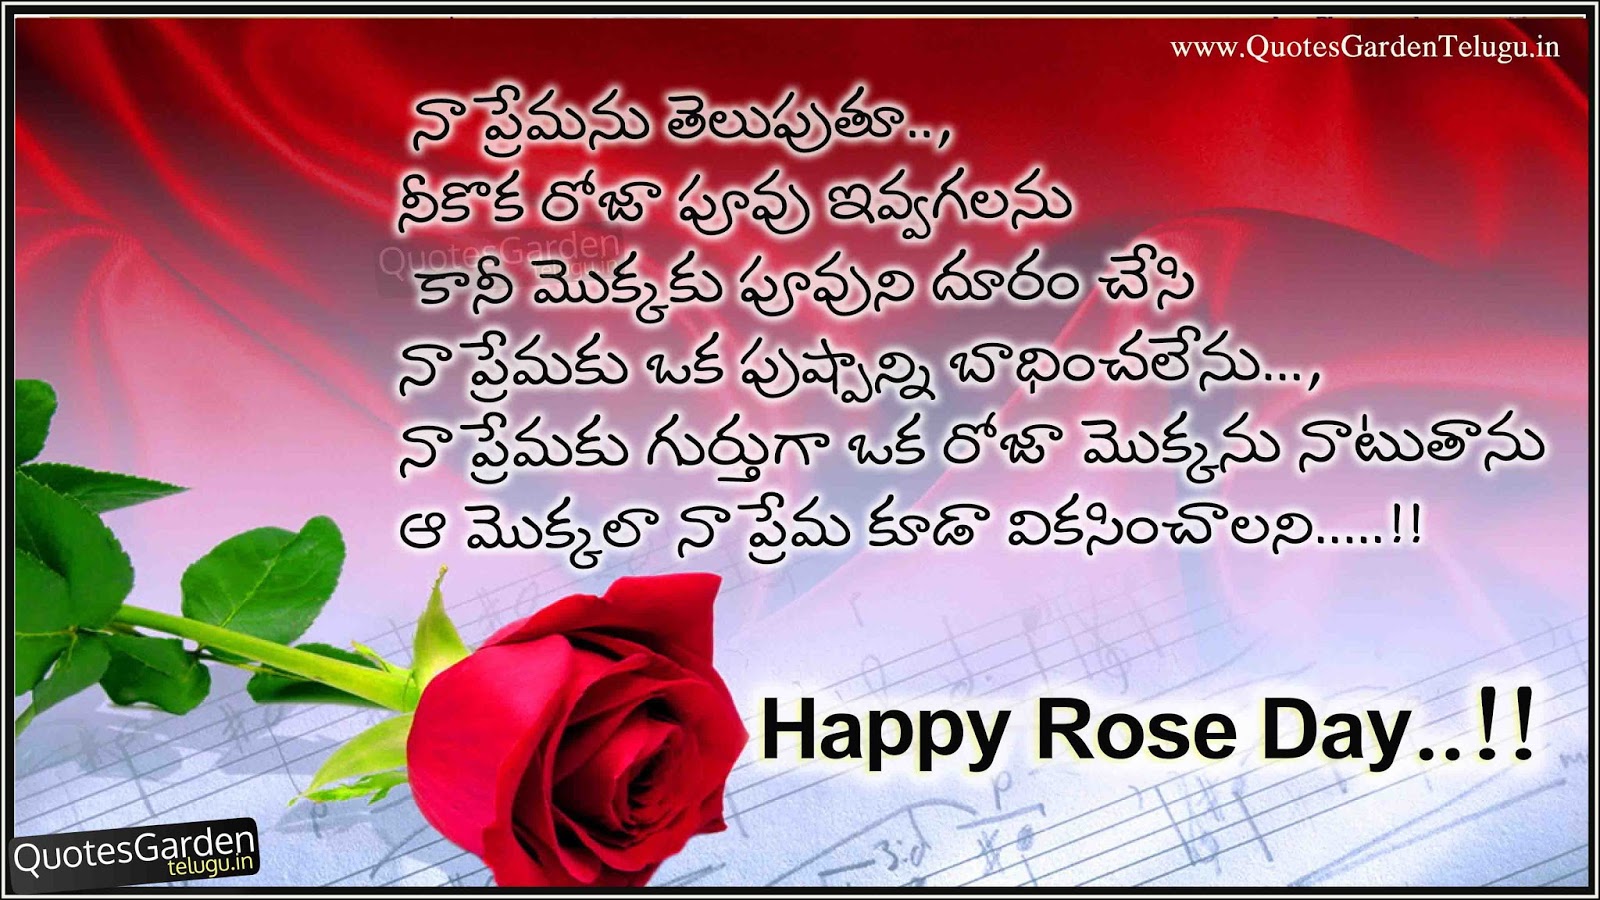 Happy rose day quotes in telugu garden